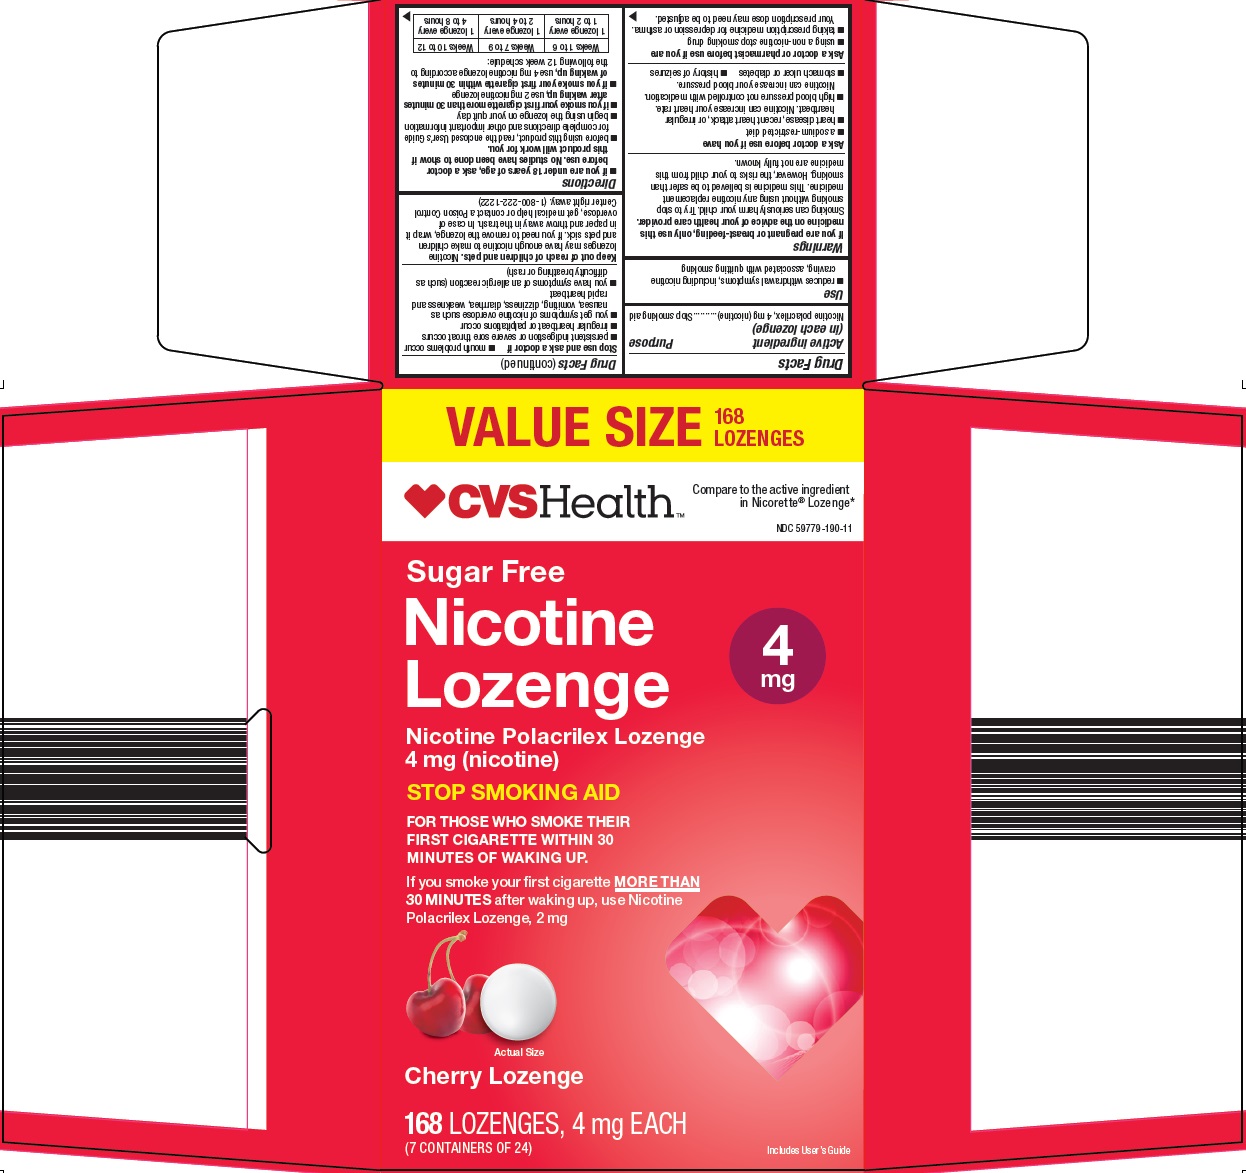 190-17-nicotine lozenge-1.jpg